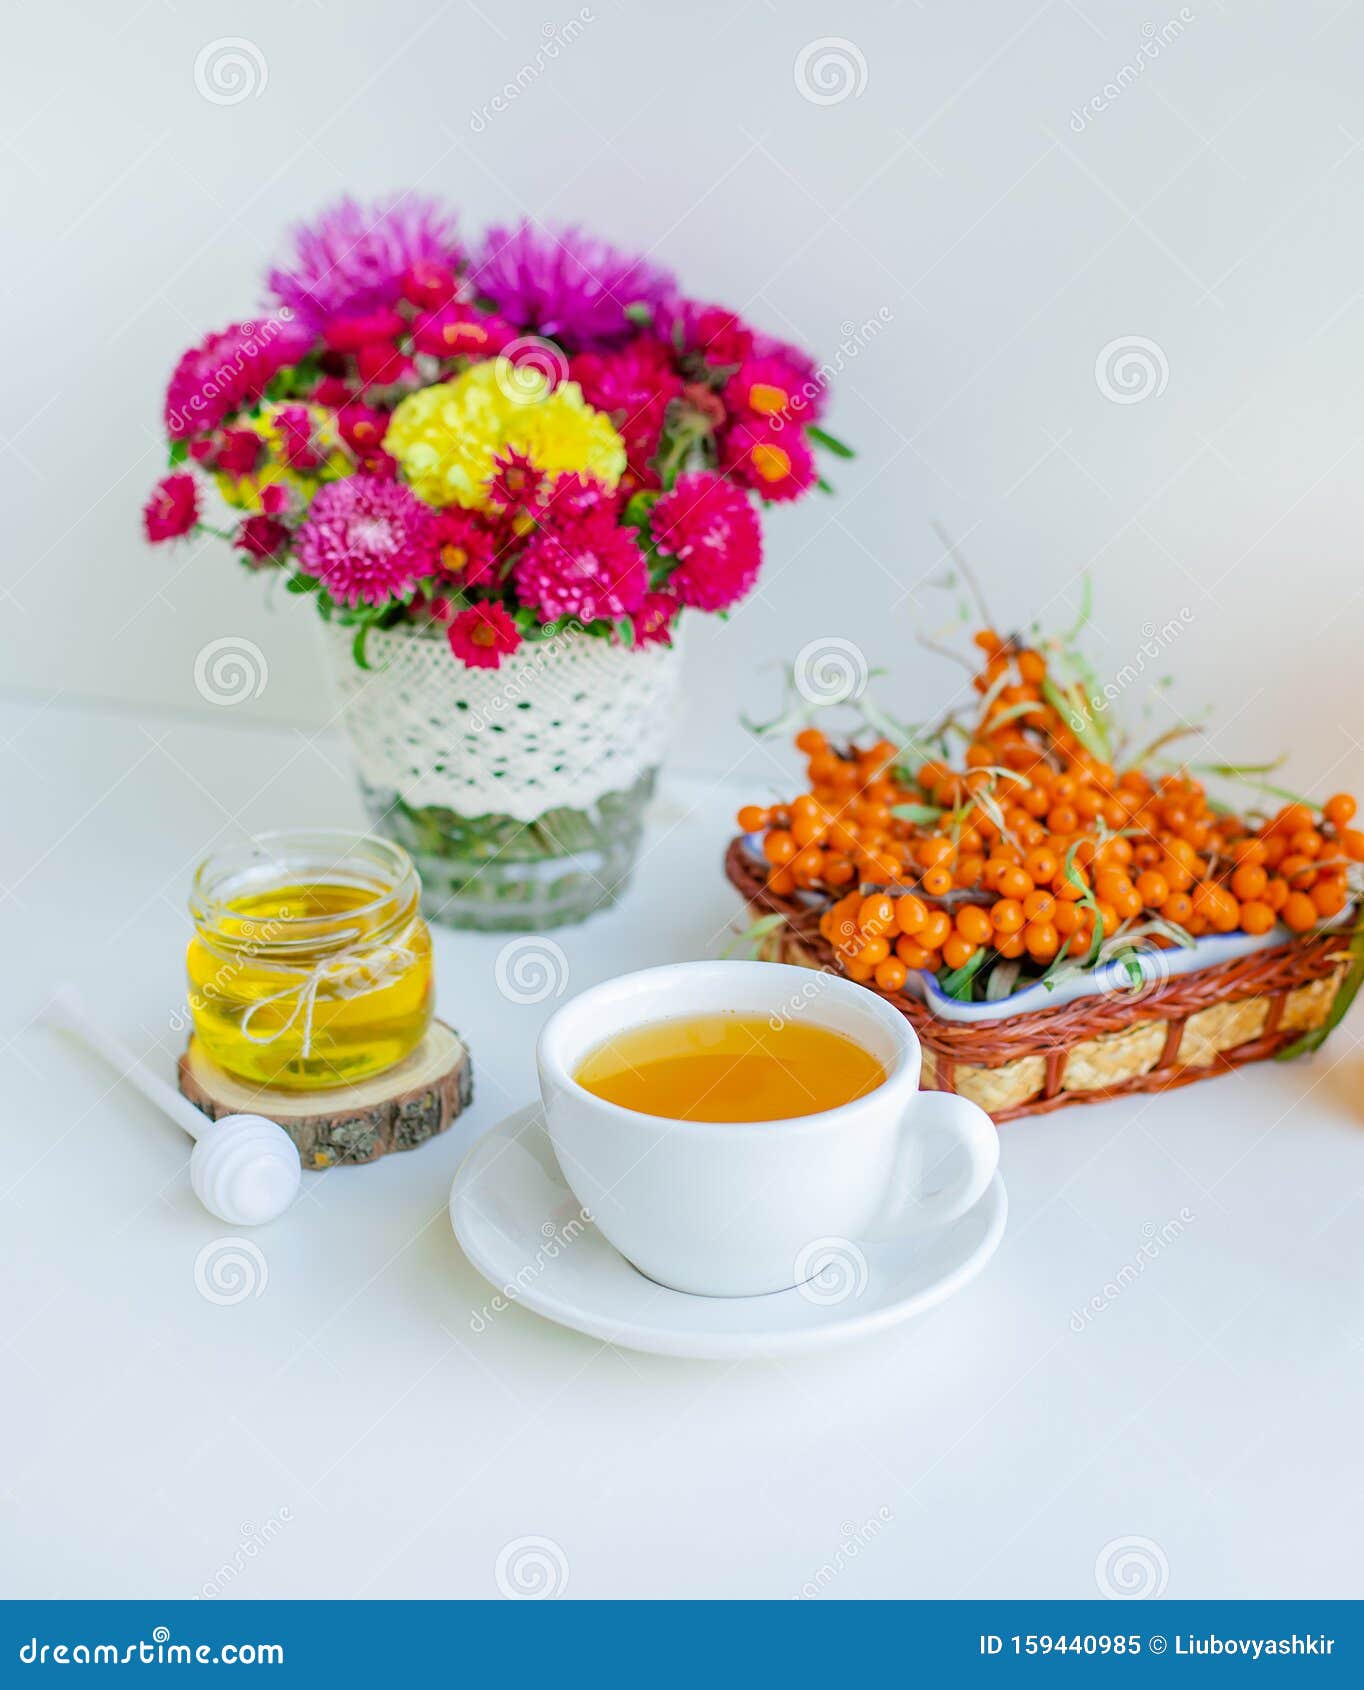 Sweet honey warm Recipe: Seared